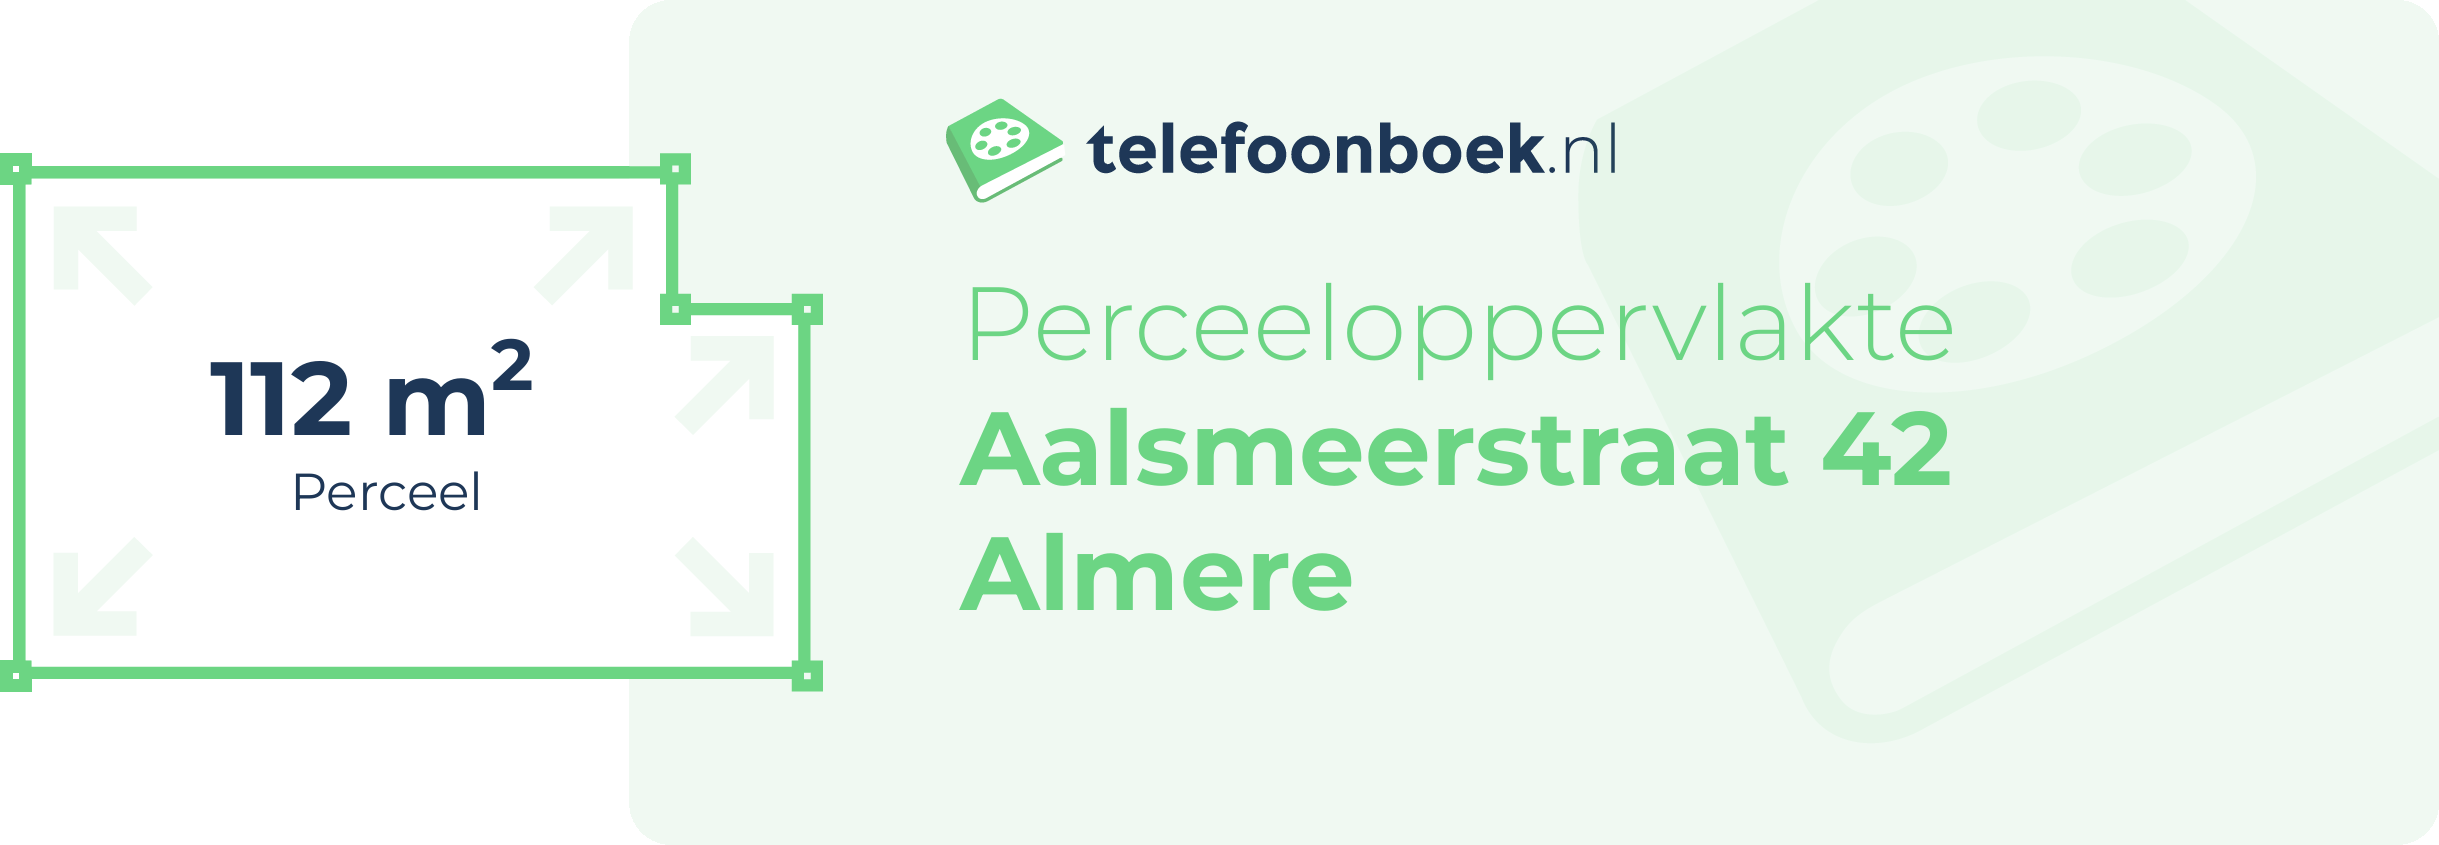 Perceeloppervlakte Aalsmeerstraat 42 Almere